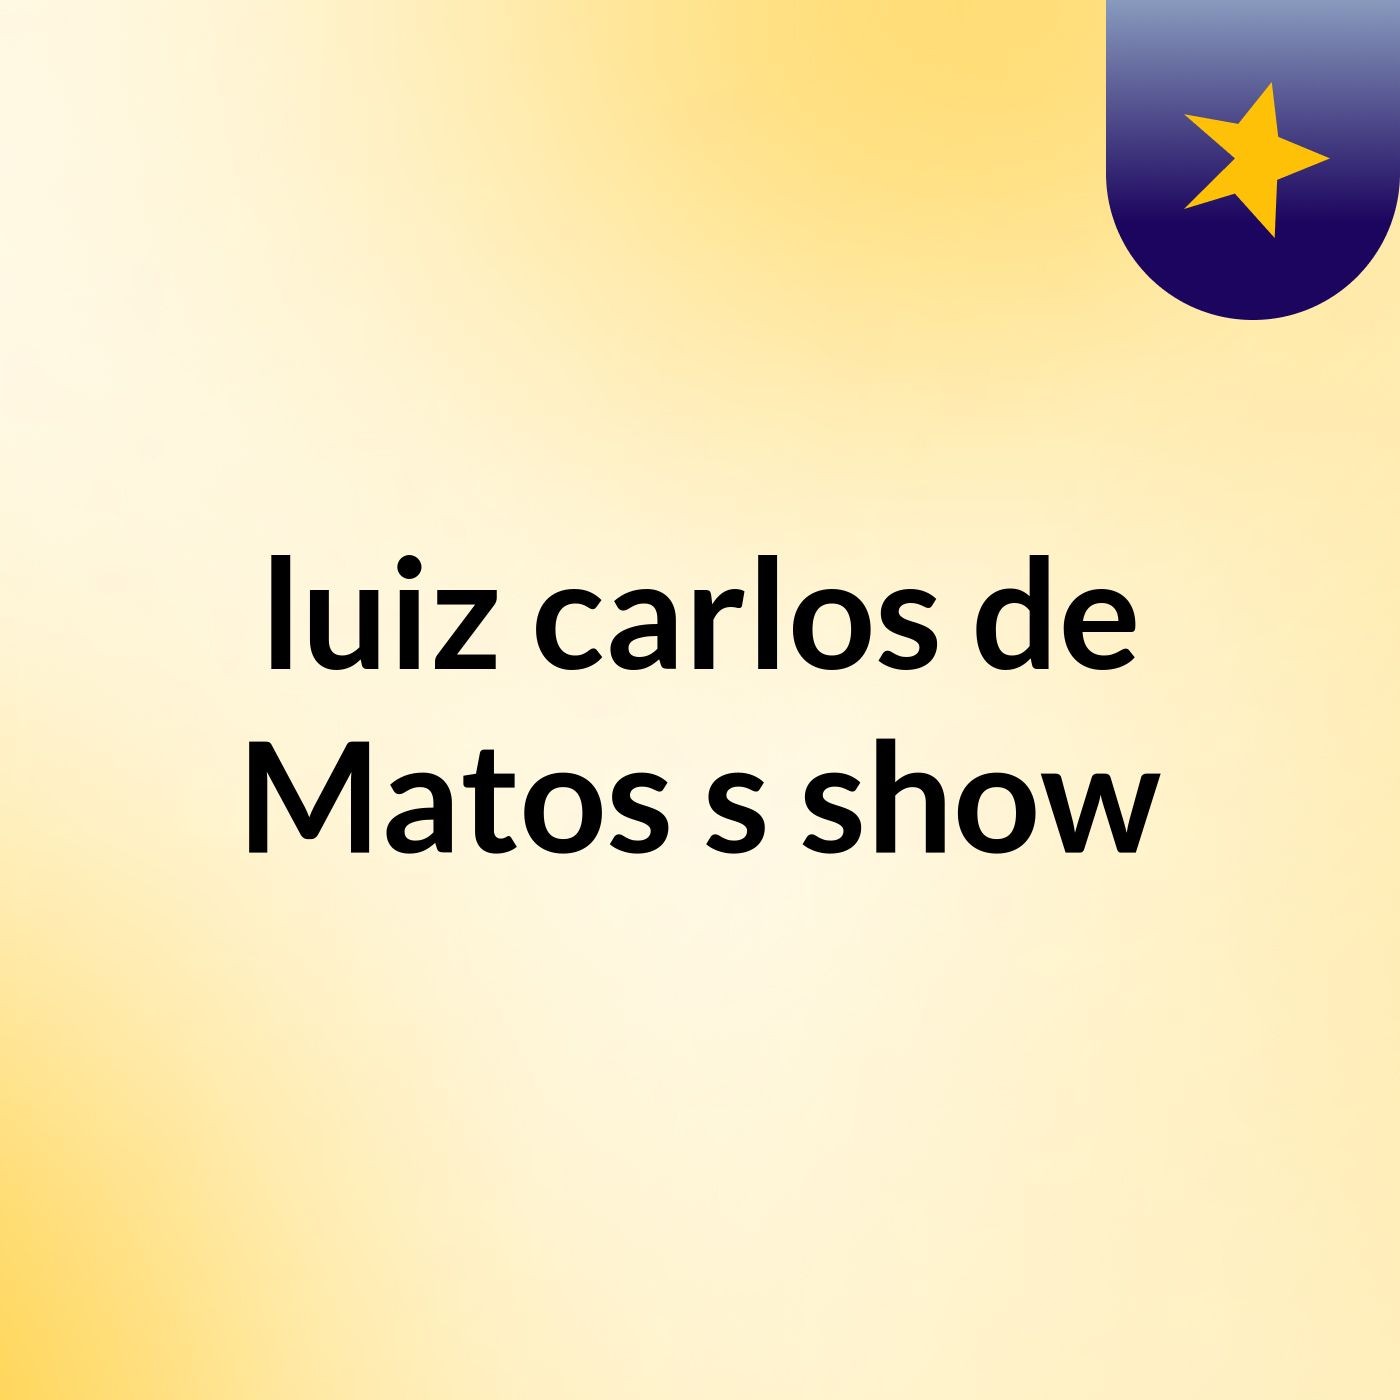 luiz carlos de Matos's show